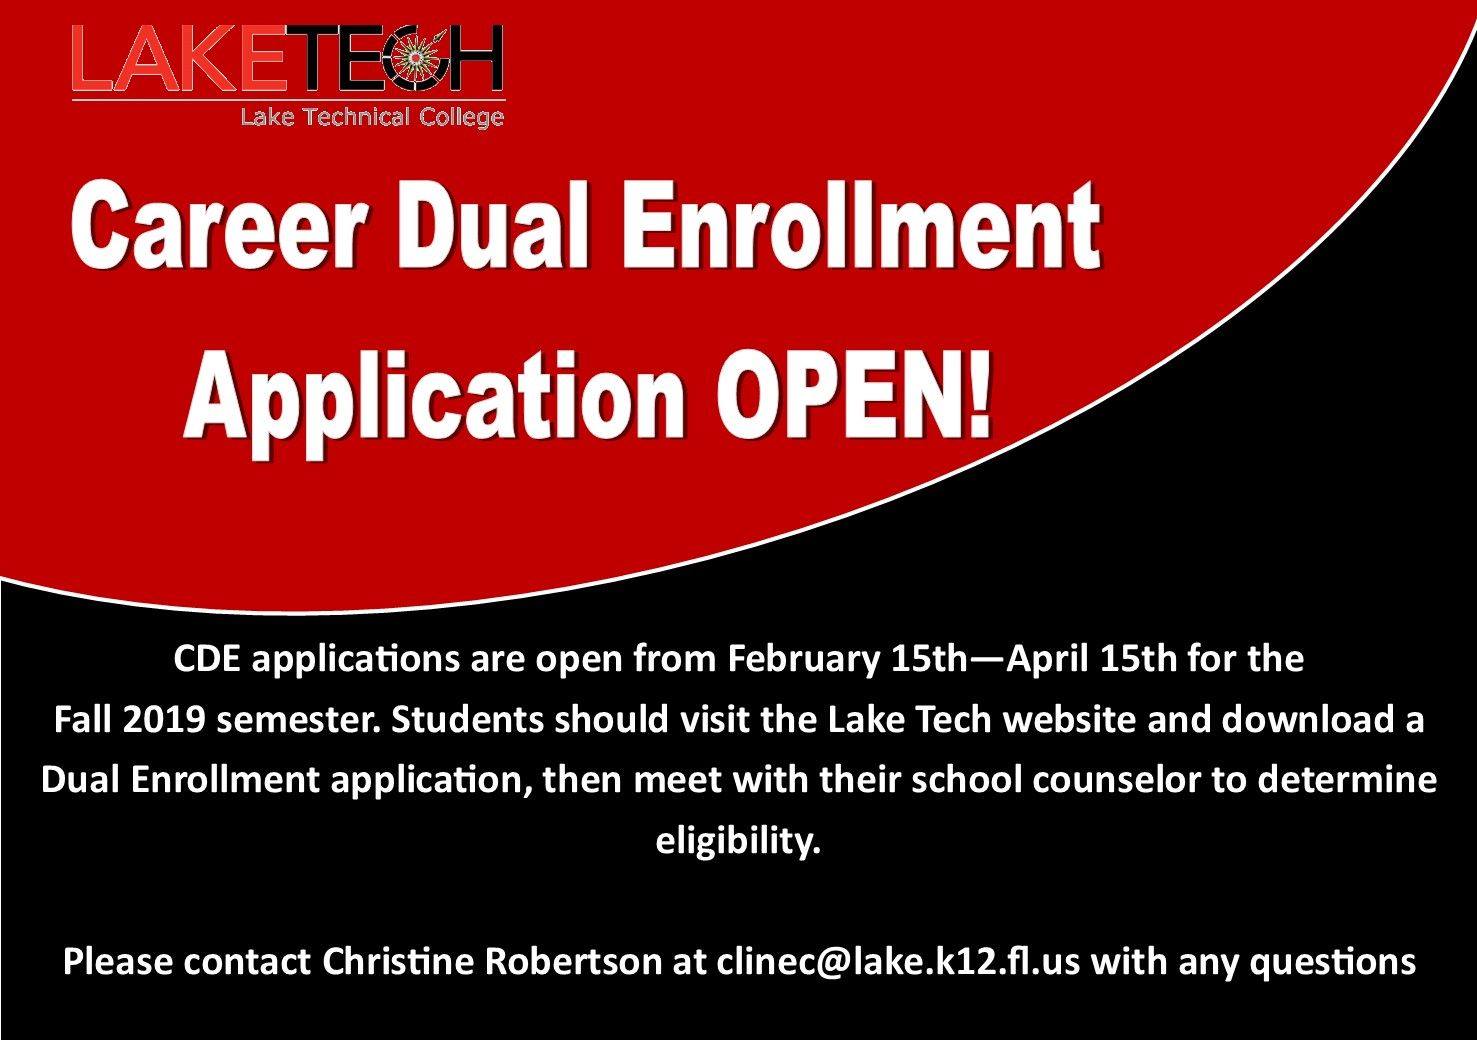 career dual enrollment Student Affairs 03/08/19